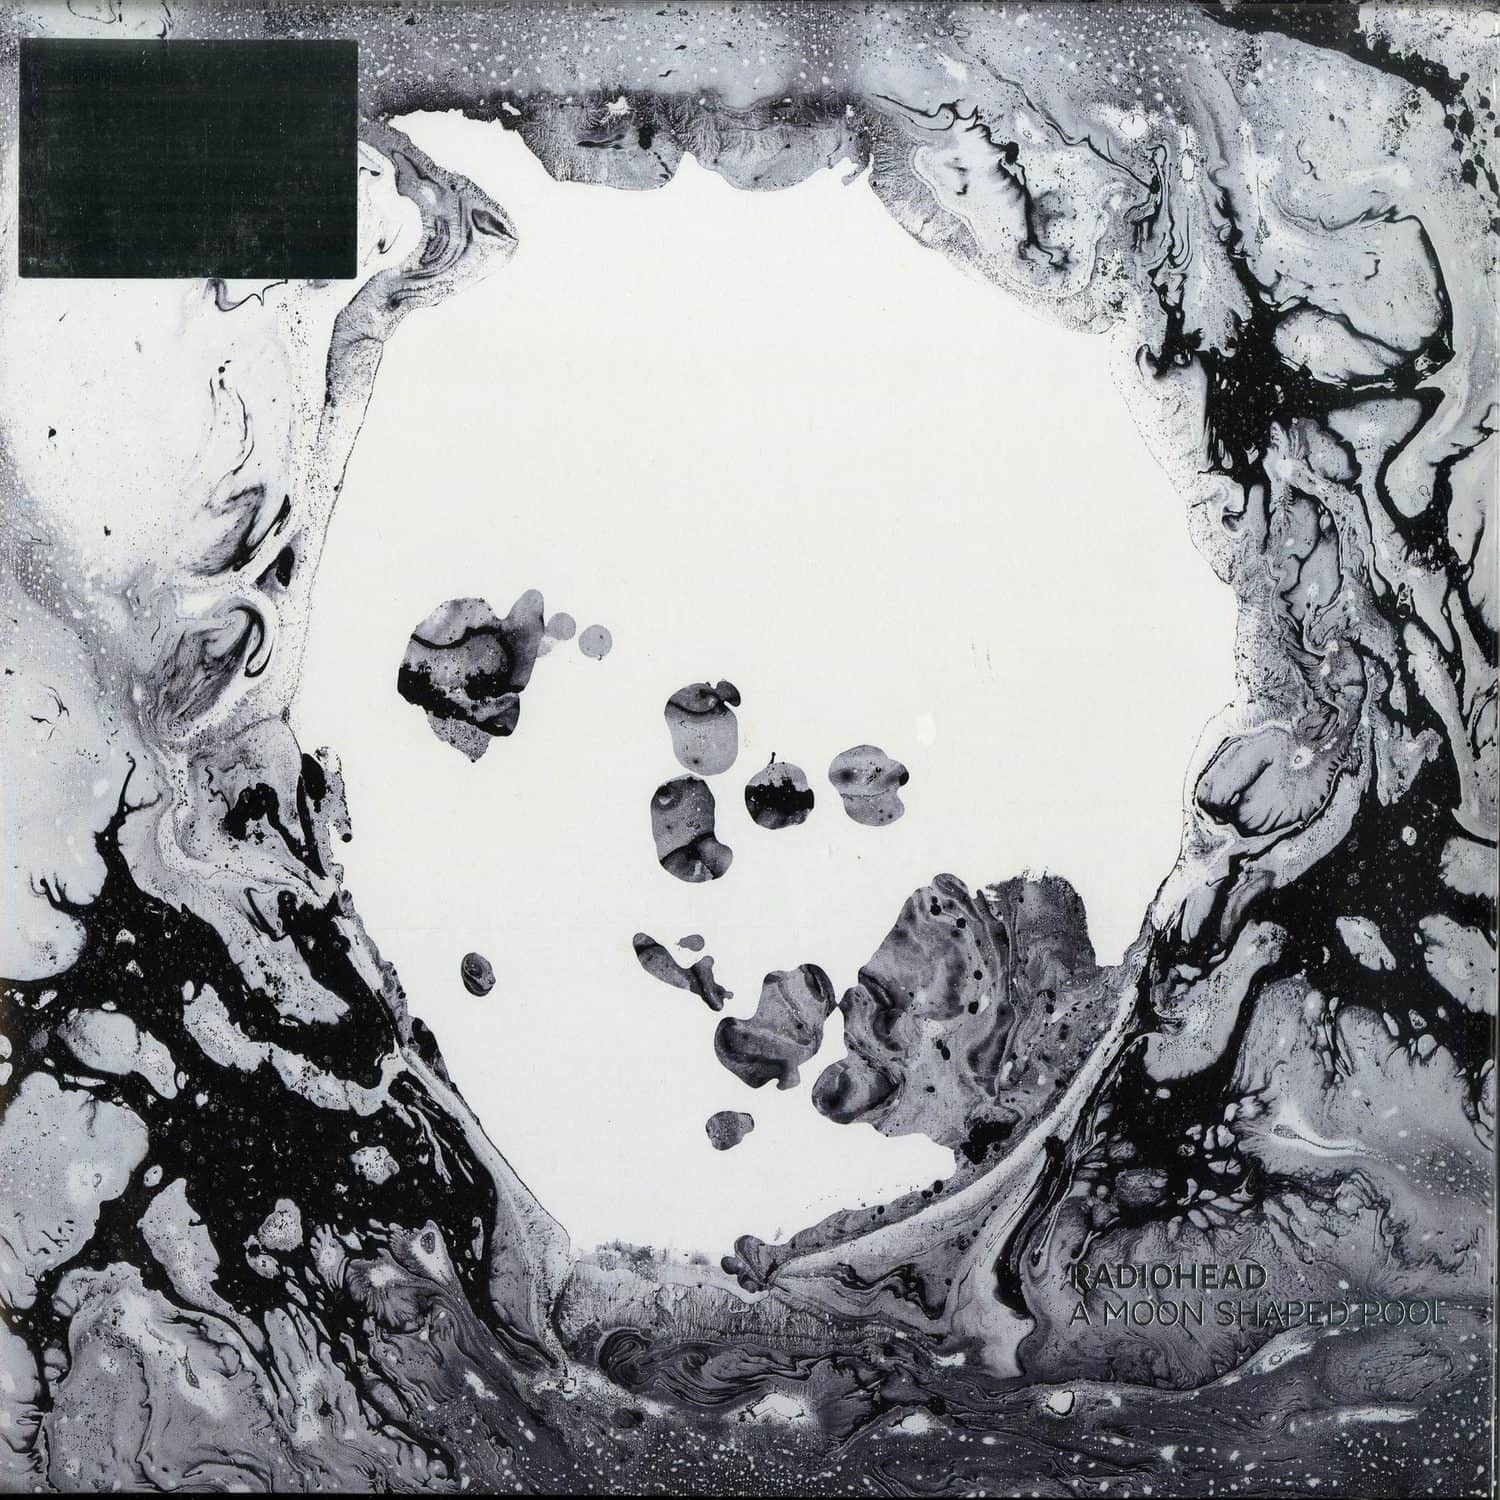 Radiohead - A MOON SHAPED POOL 